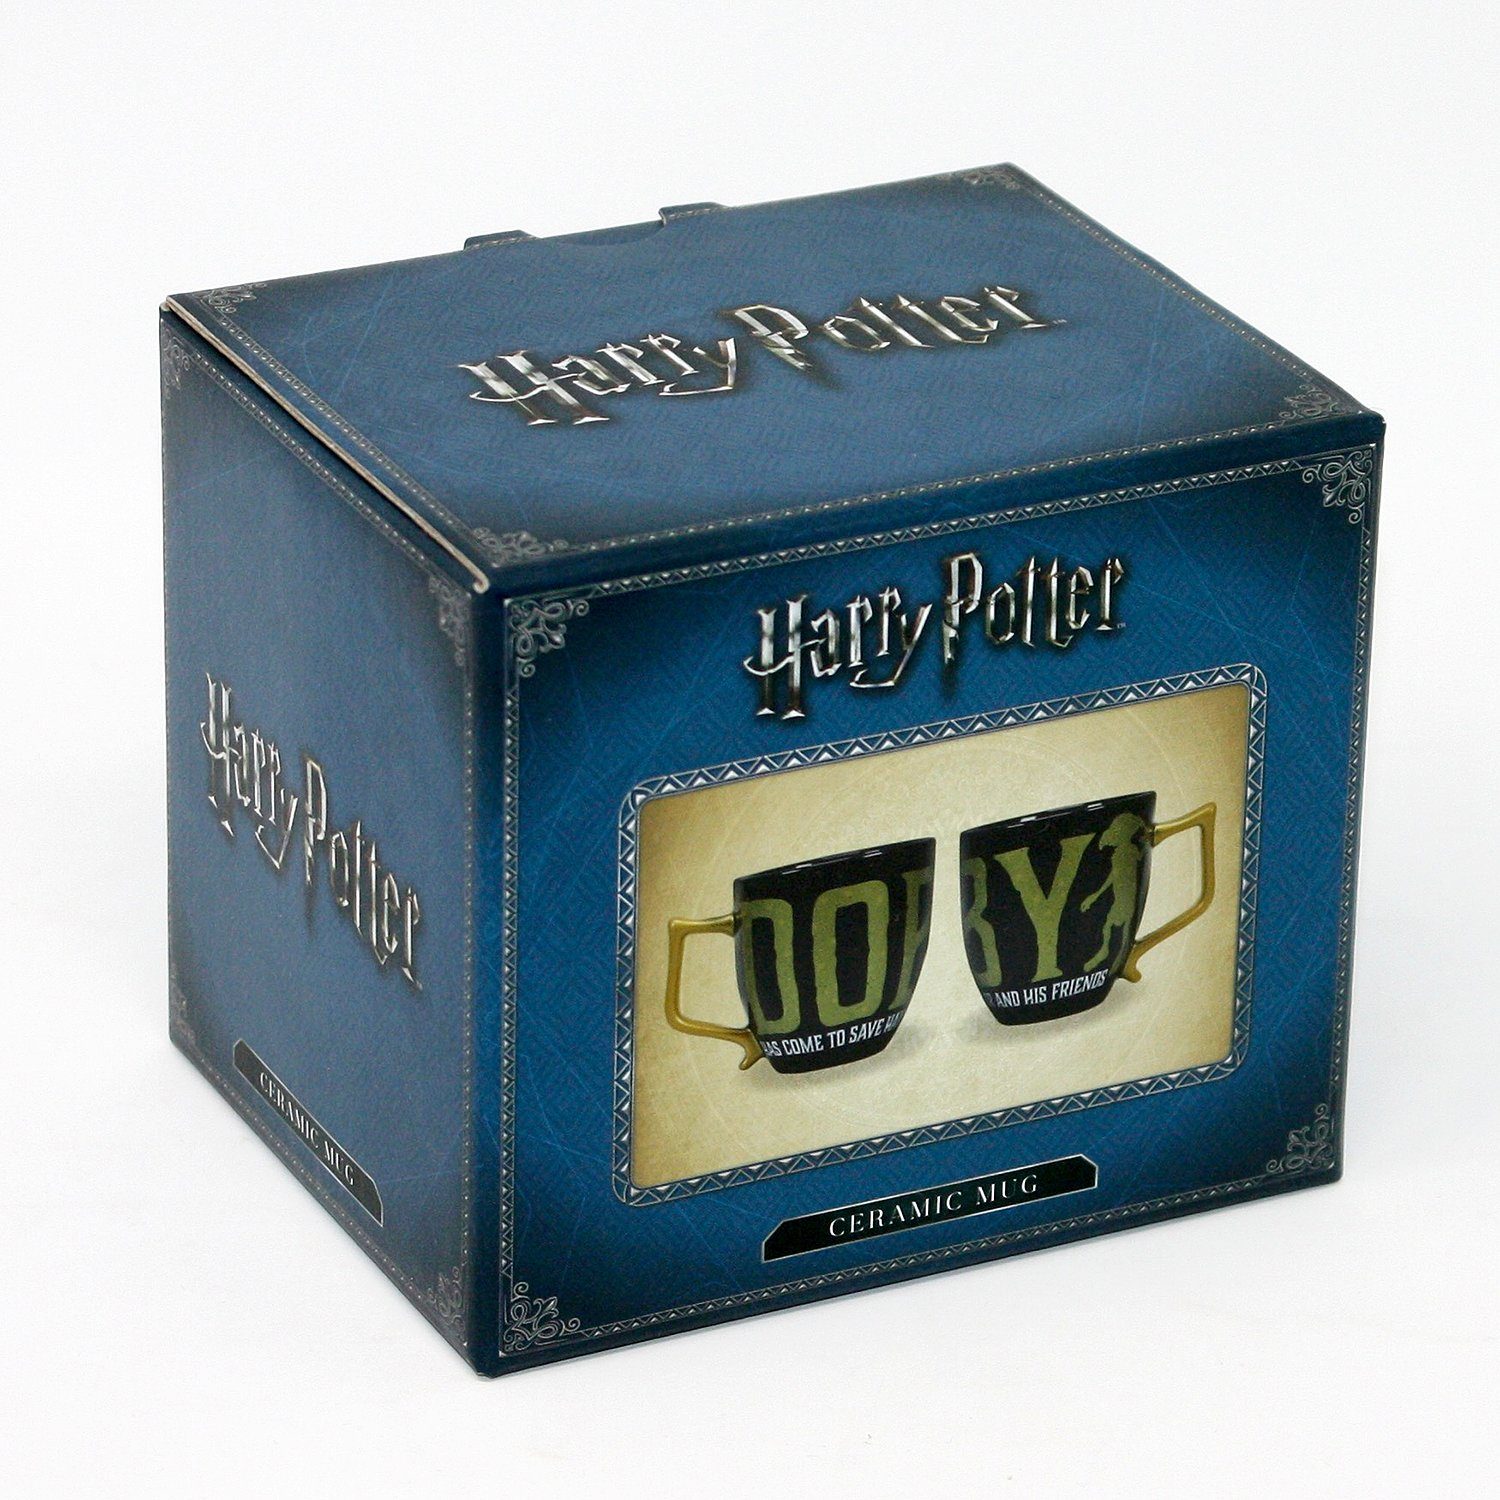 HMB Harry XL Potter Tasse Keramik Tasse Dobby, 100%